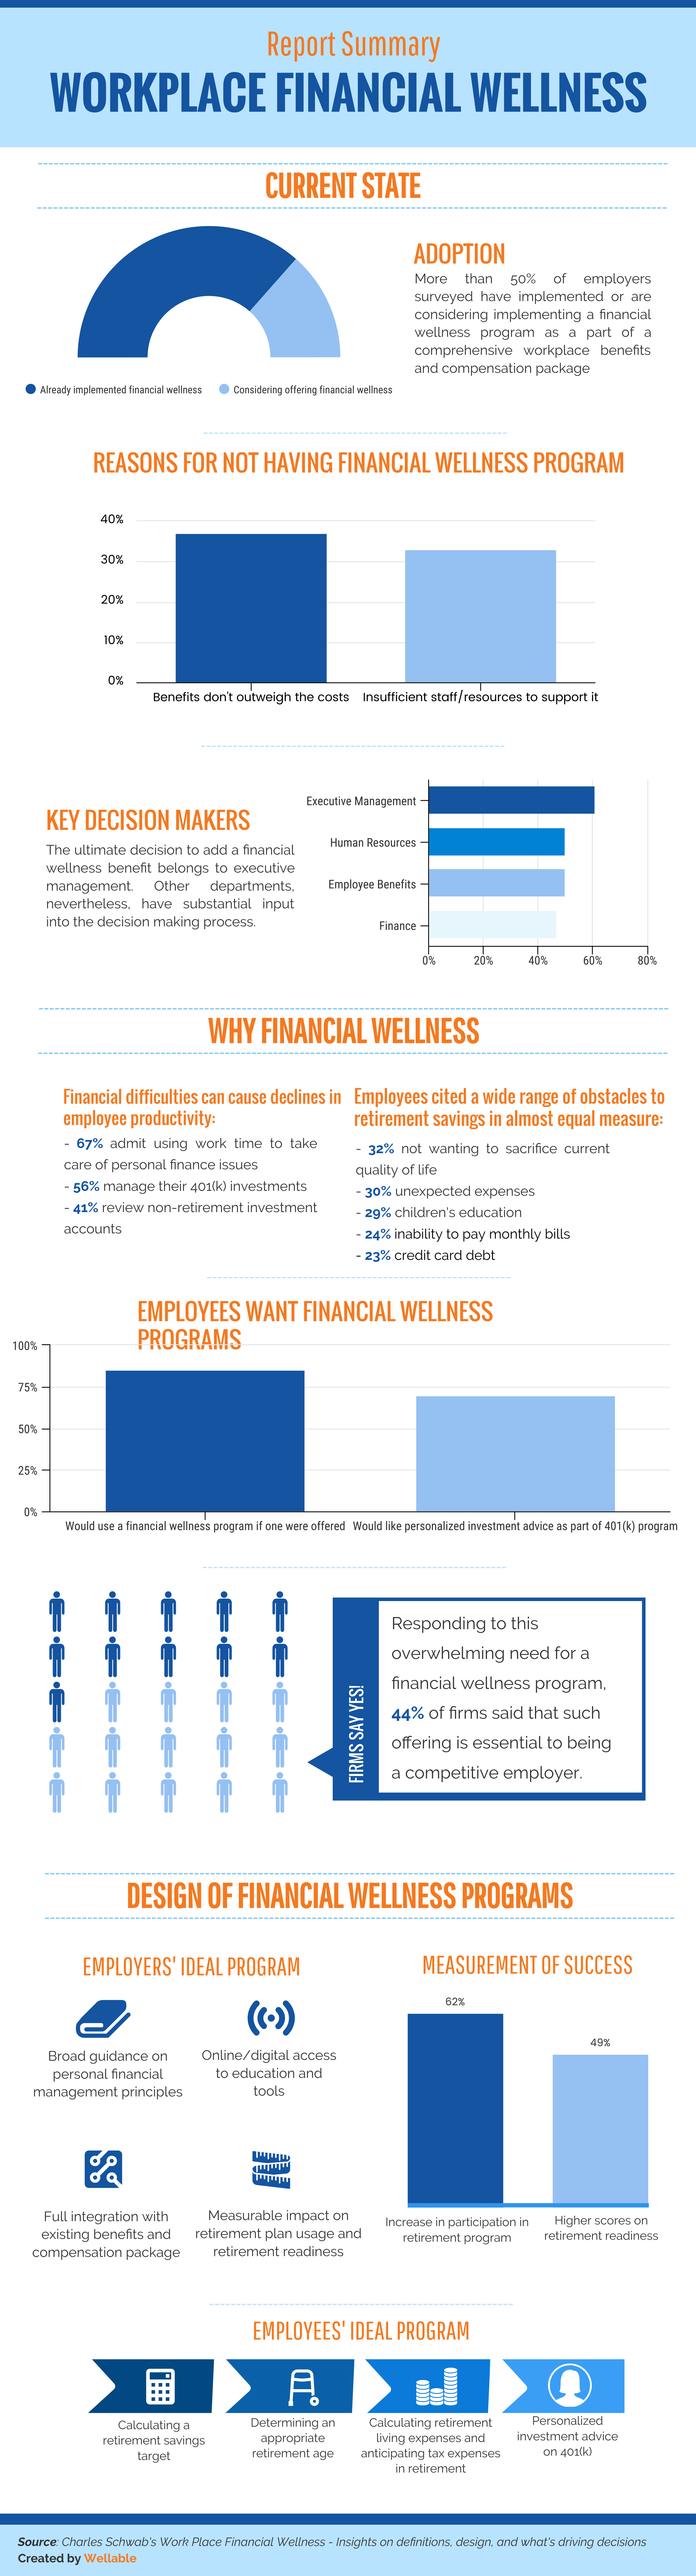 charles schwab financial wellness survey